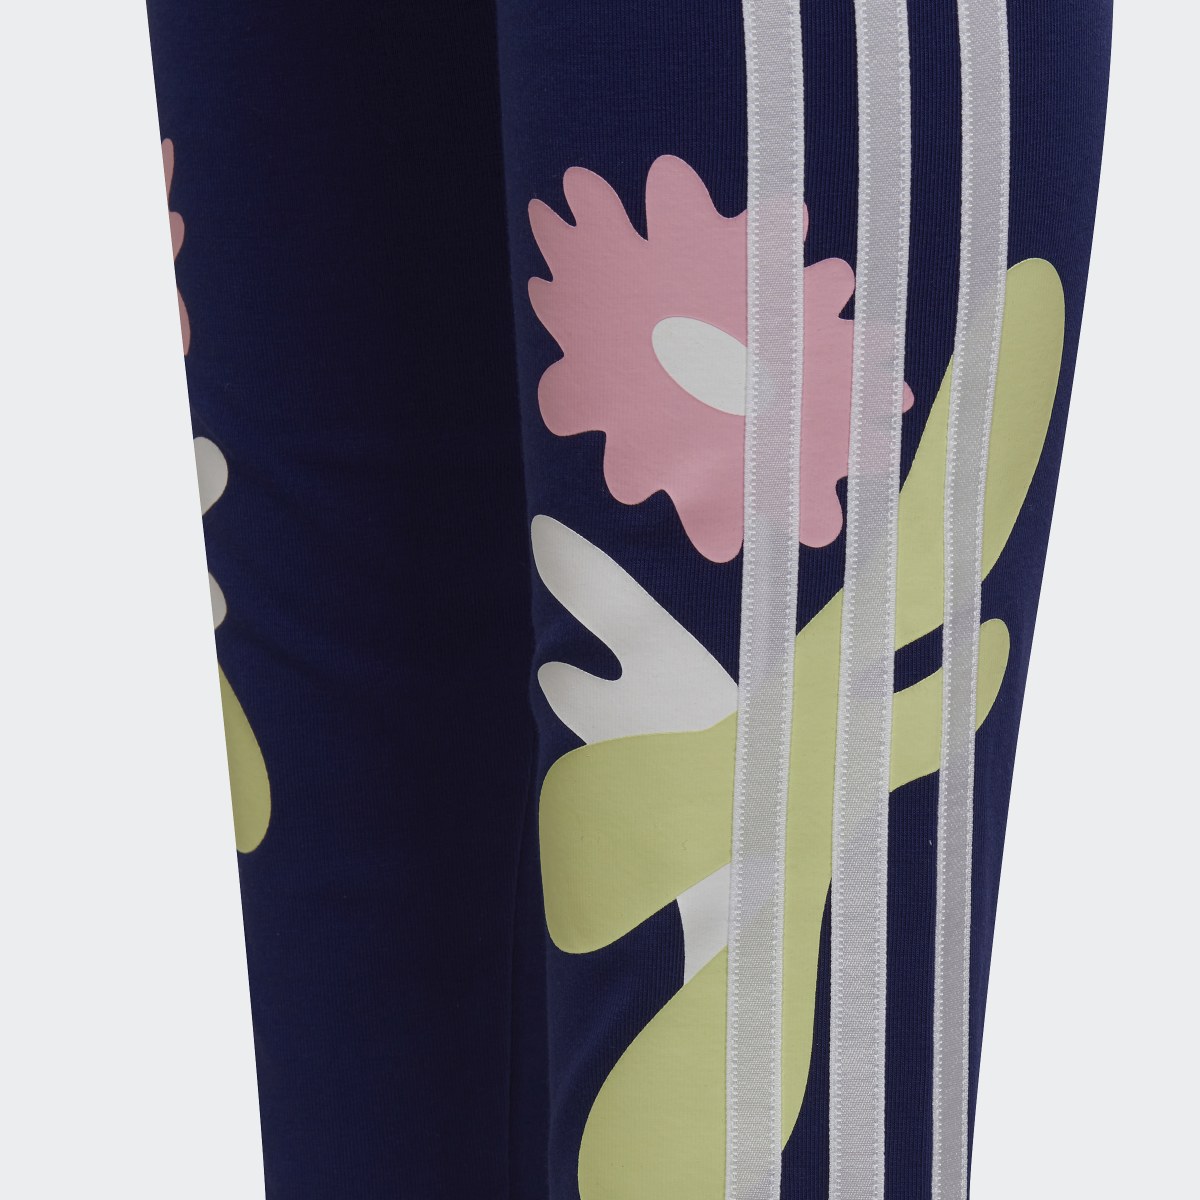 Adidas Flower Print Tights. 4